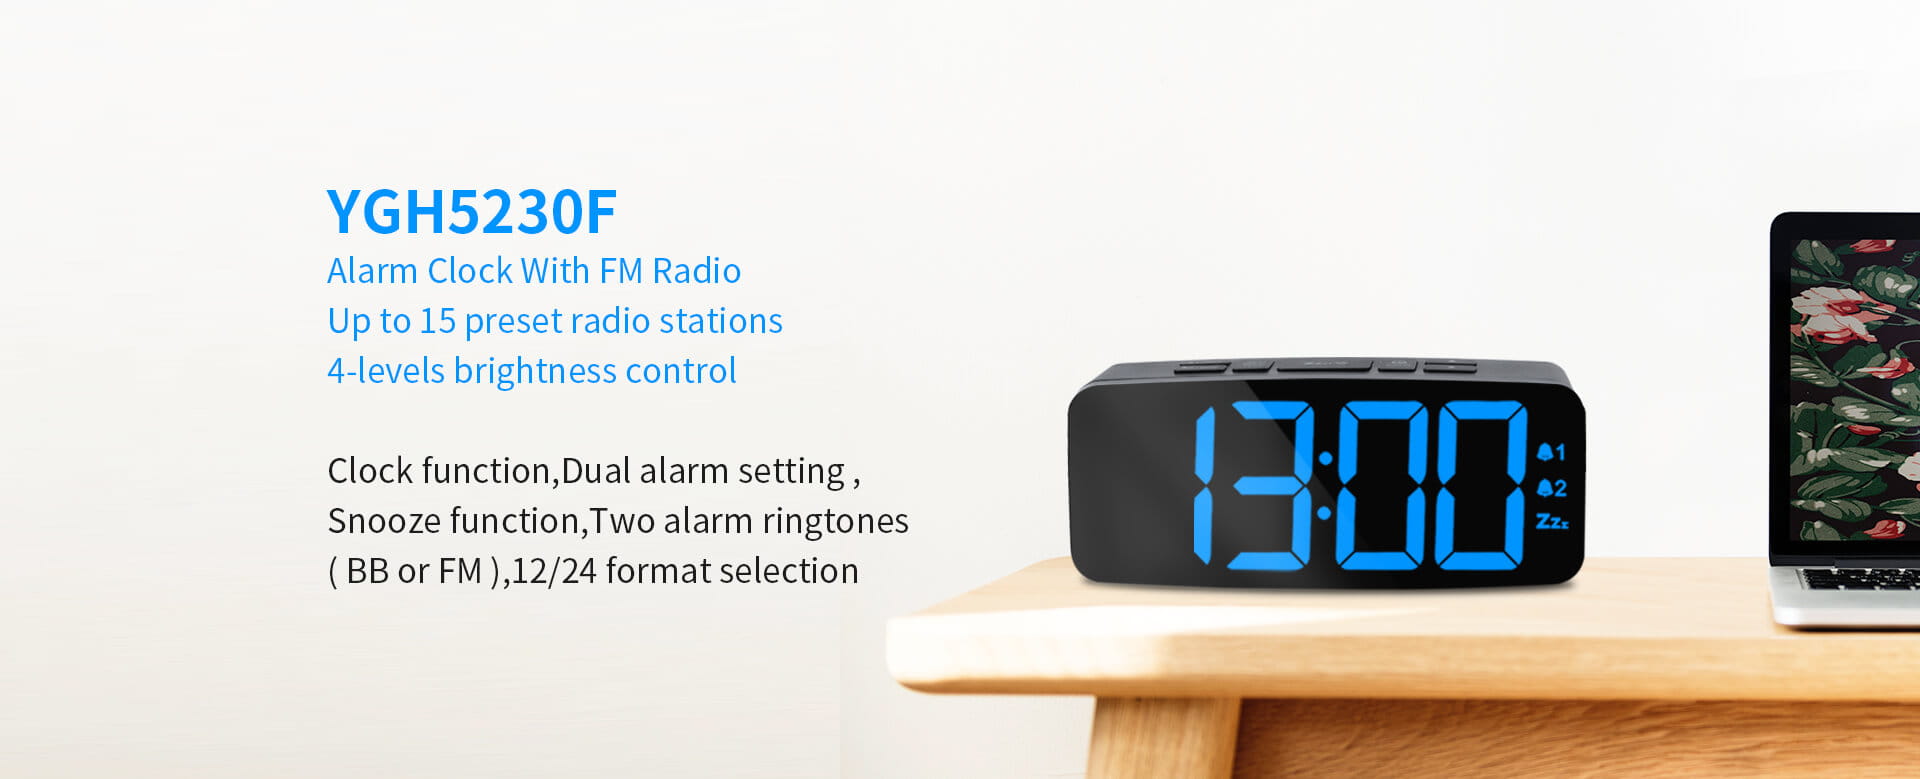 Alarm Clock With FM Radio